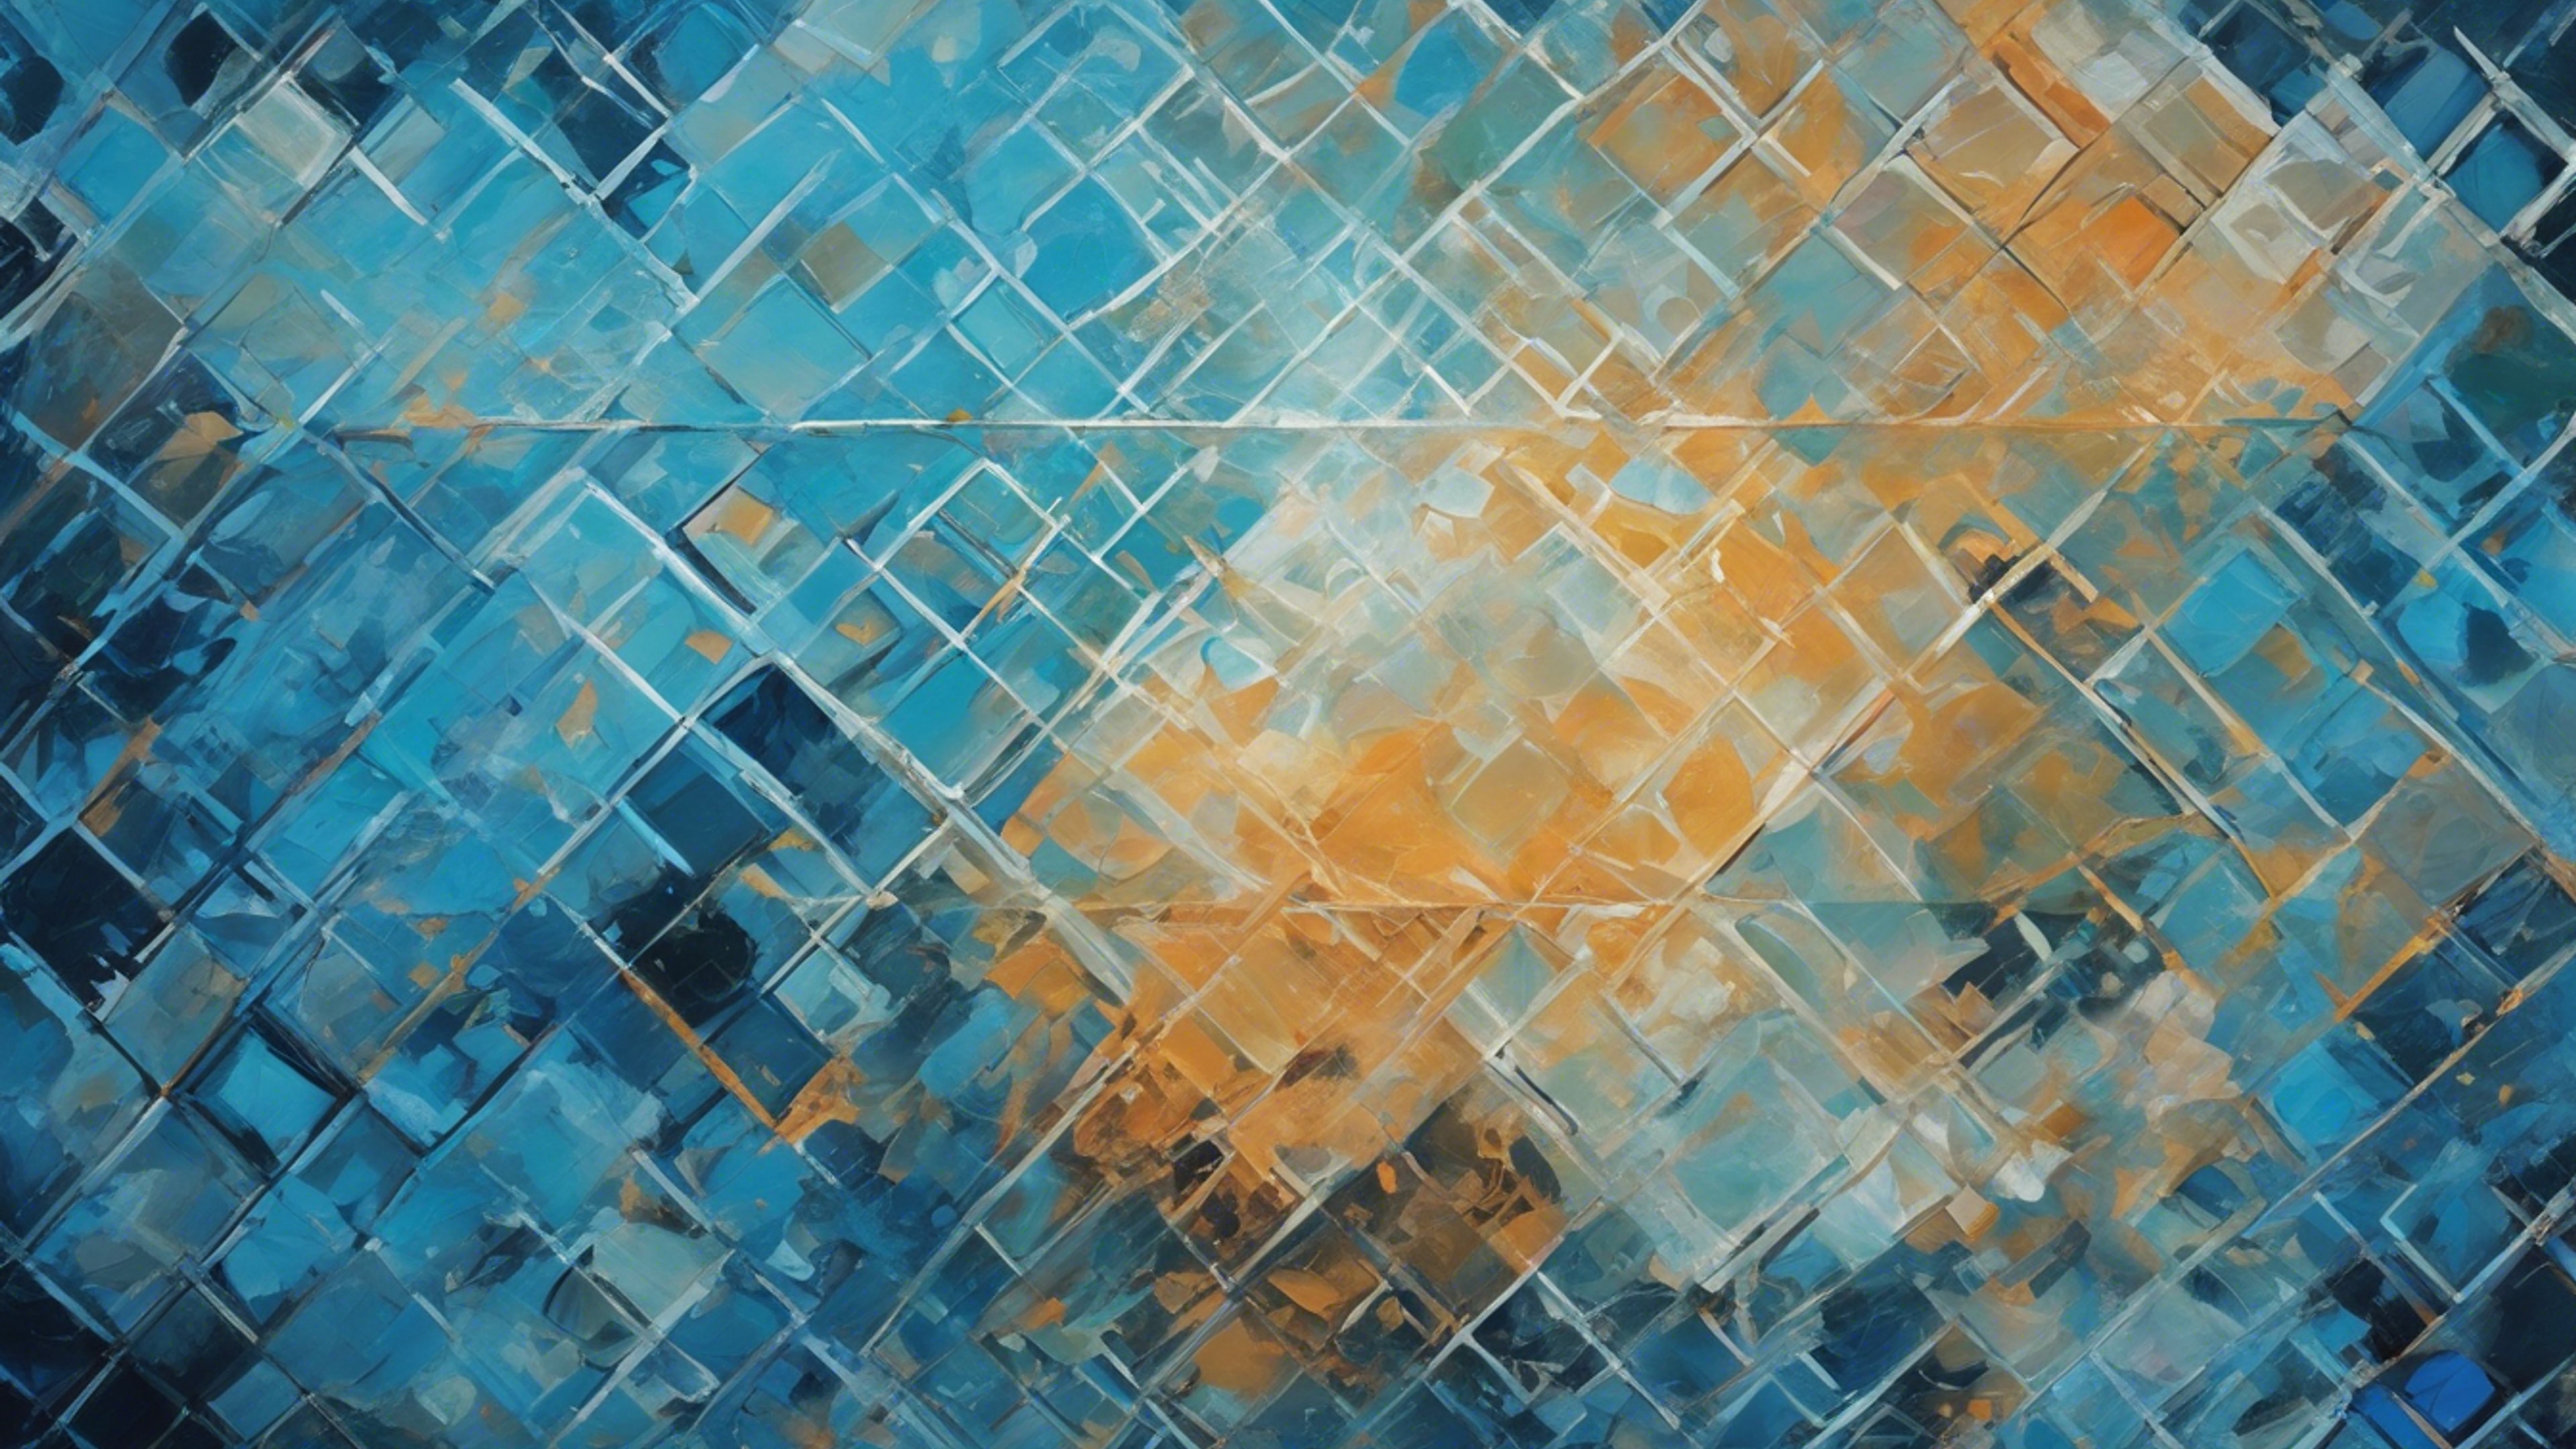 A cool blue geometric abstract painting Fondo de pantalla[ac7eea7ca87f45839e46]